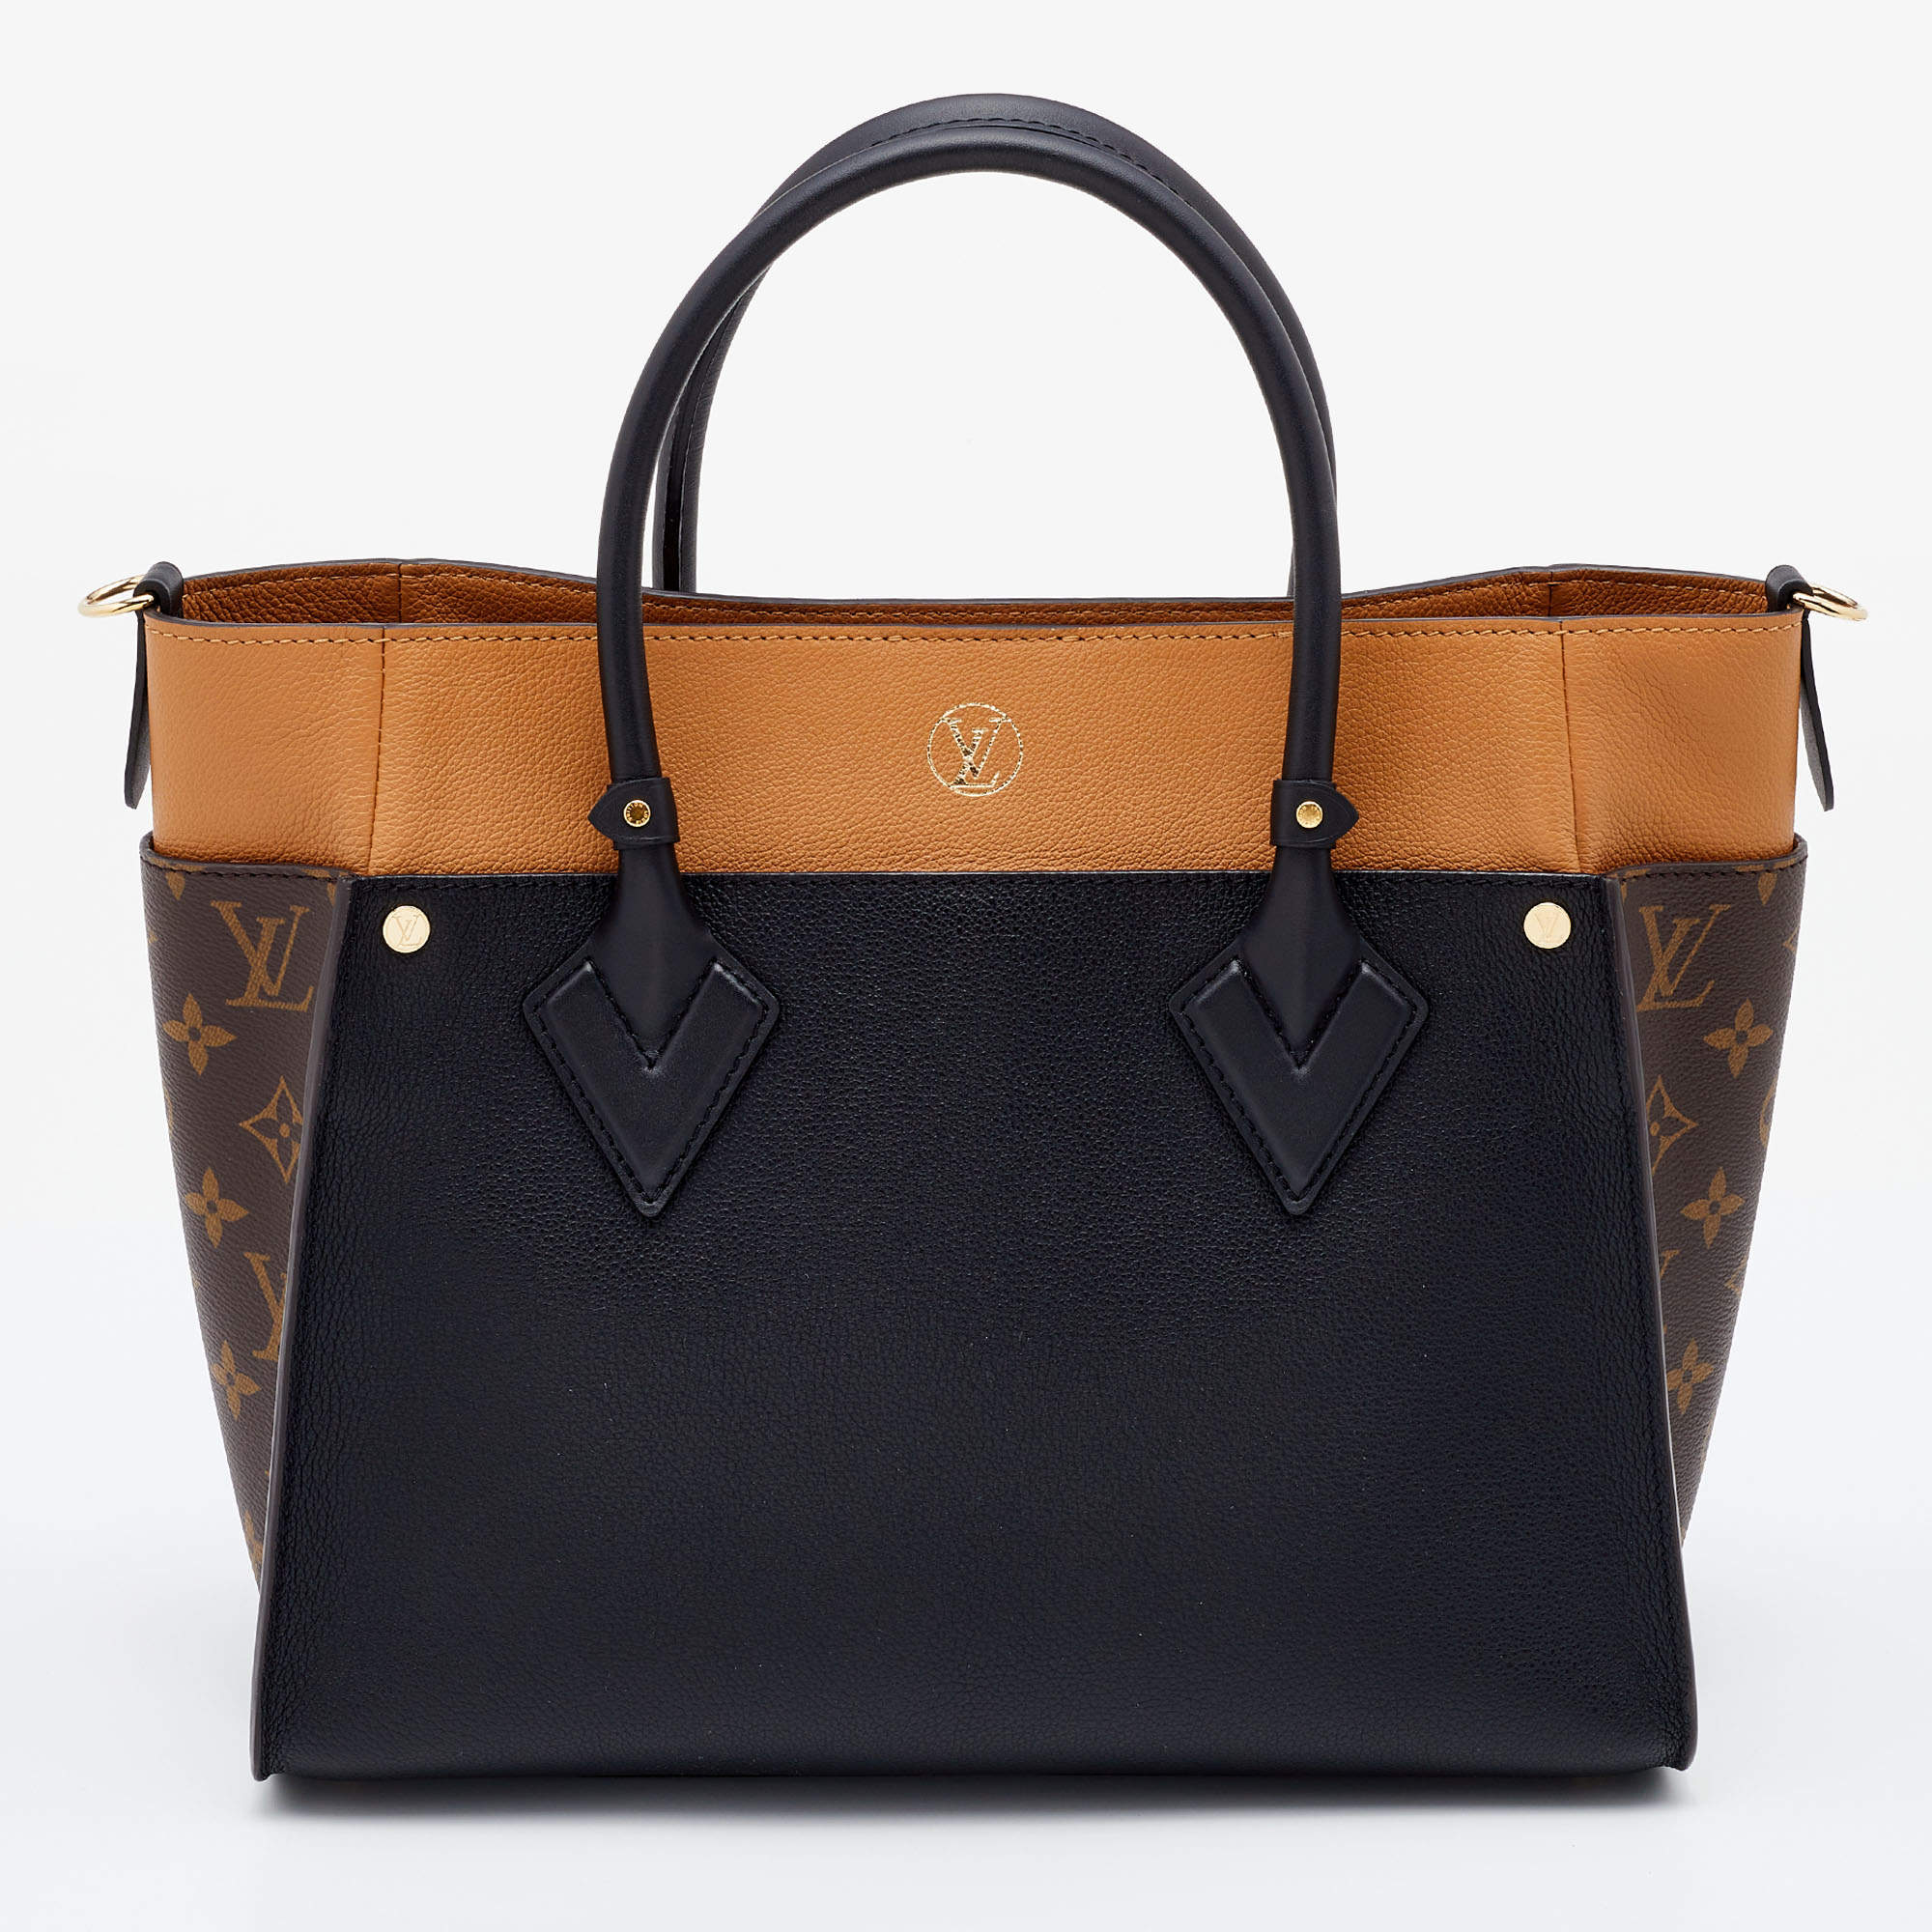 Louis Vuitton Louis Vuitton Bag Ladies 2way On My Side Mm Noir Ic